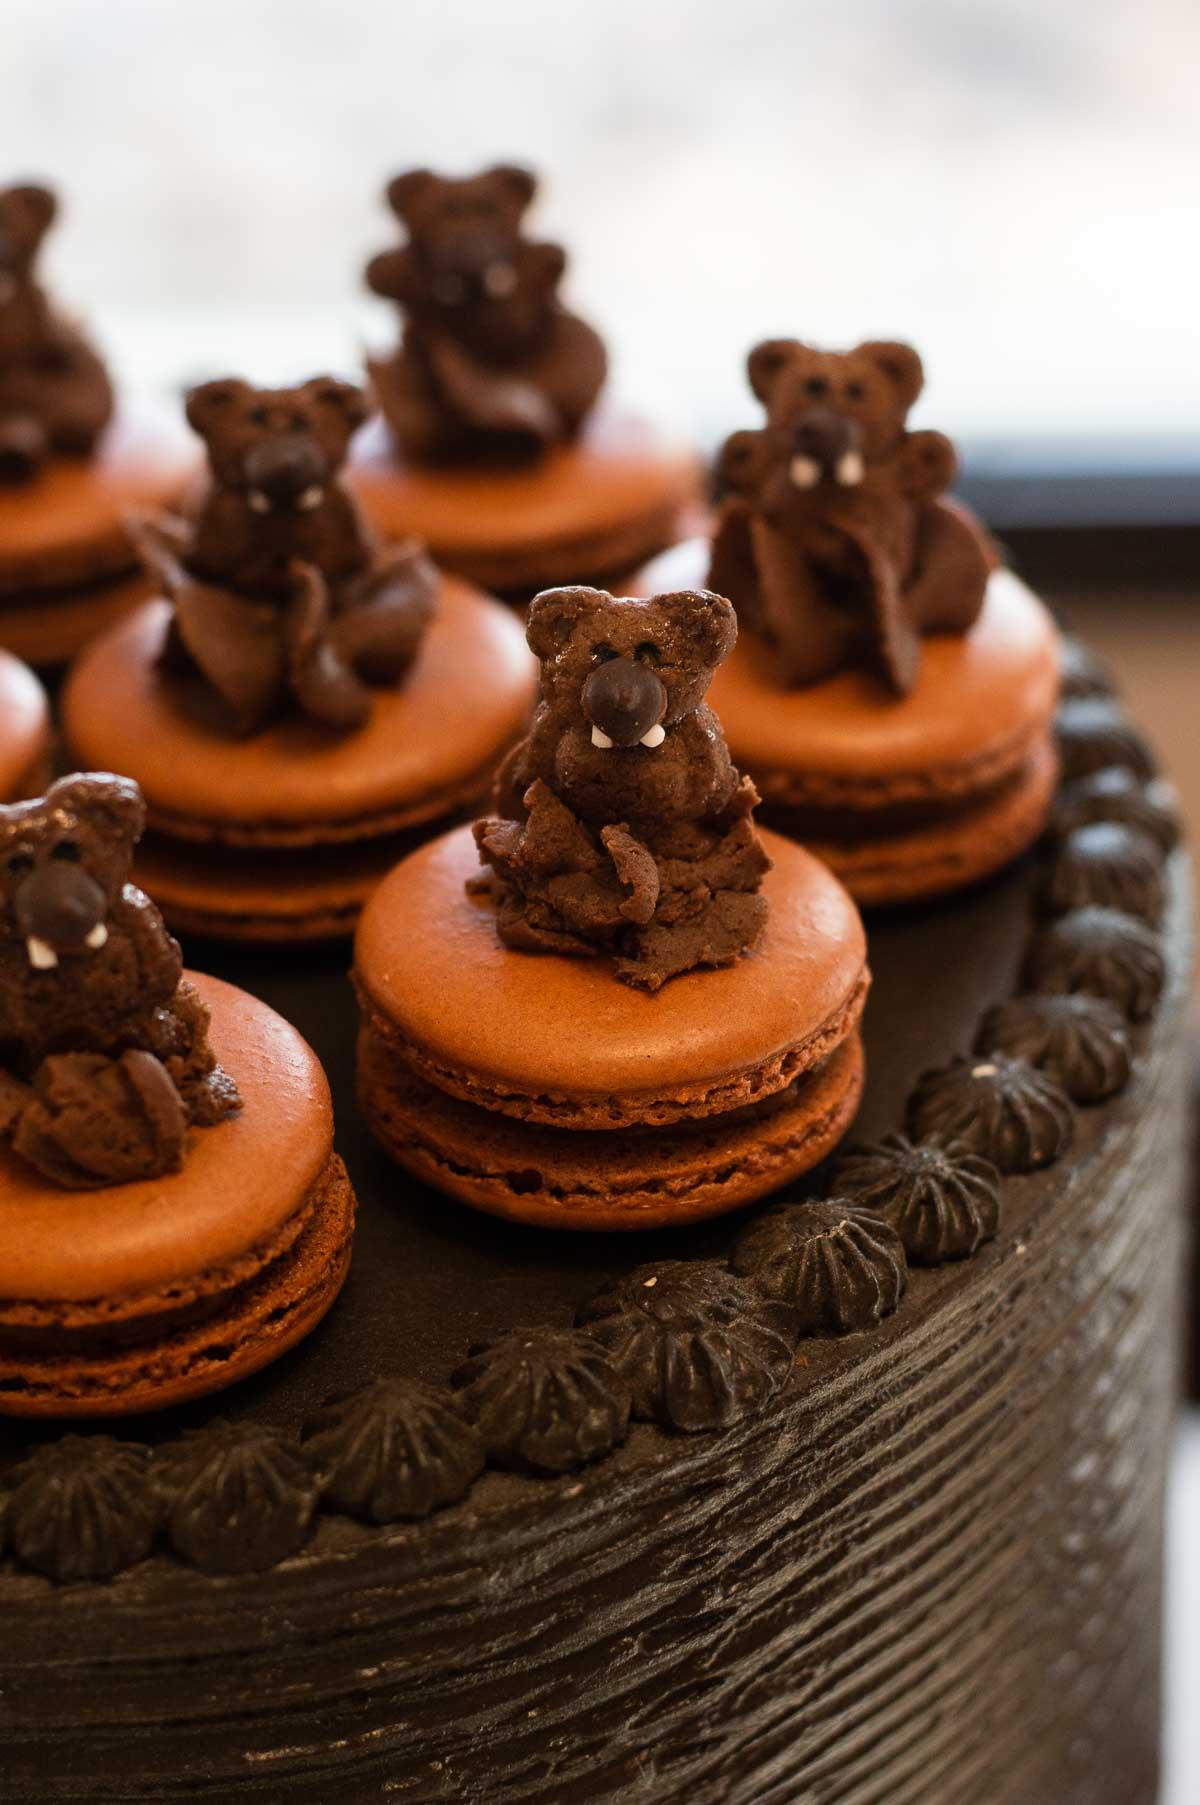 Groundhog Day macaroons on a chocolate cake